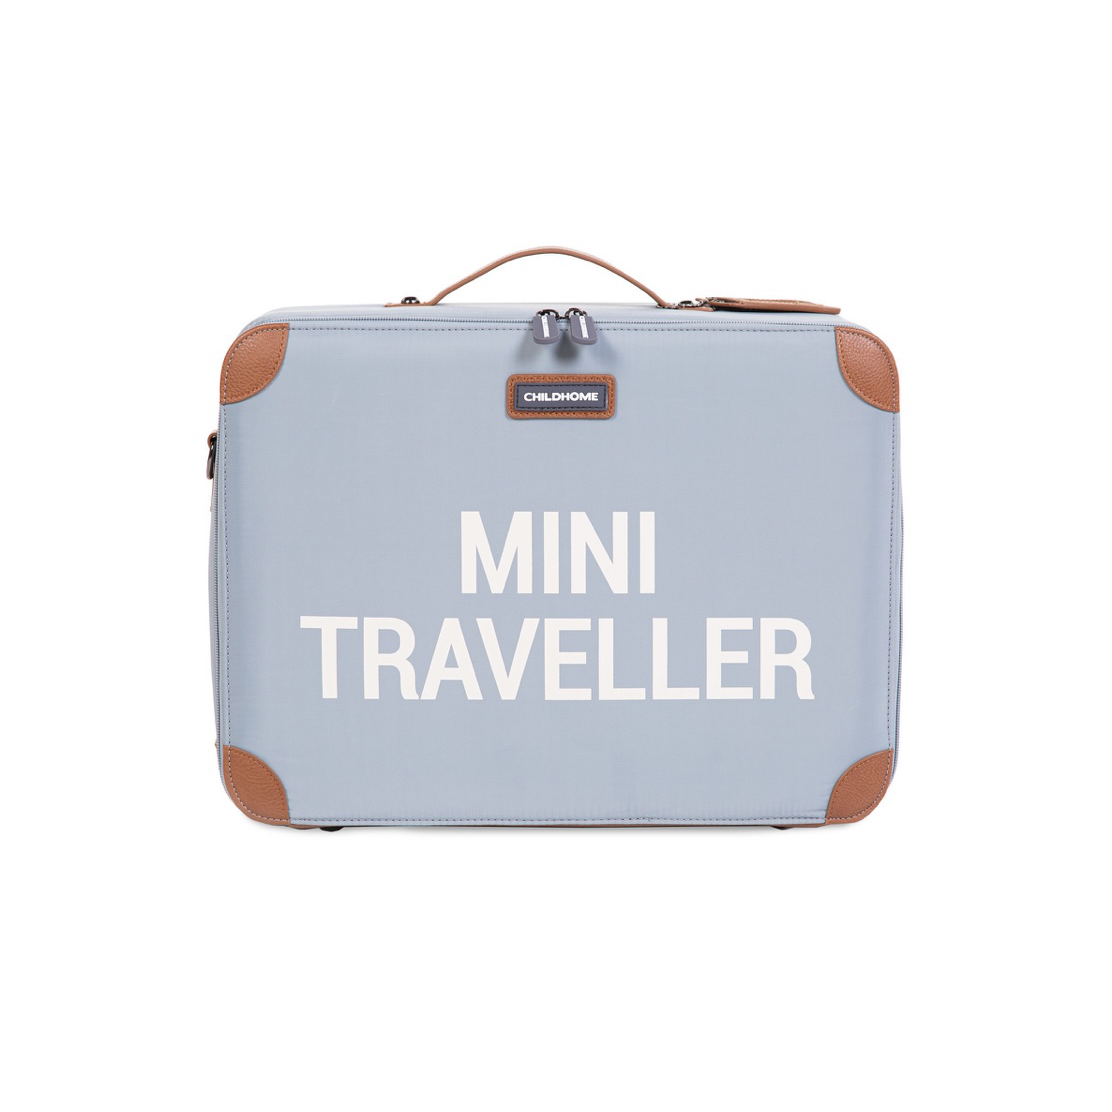 Mini Traveller - Lichtblauw/grijs